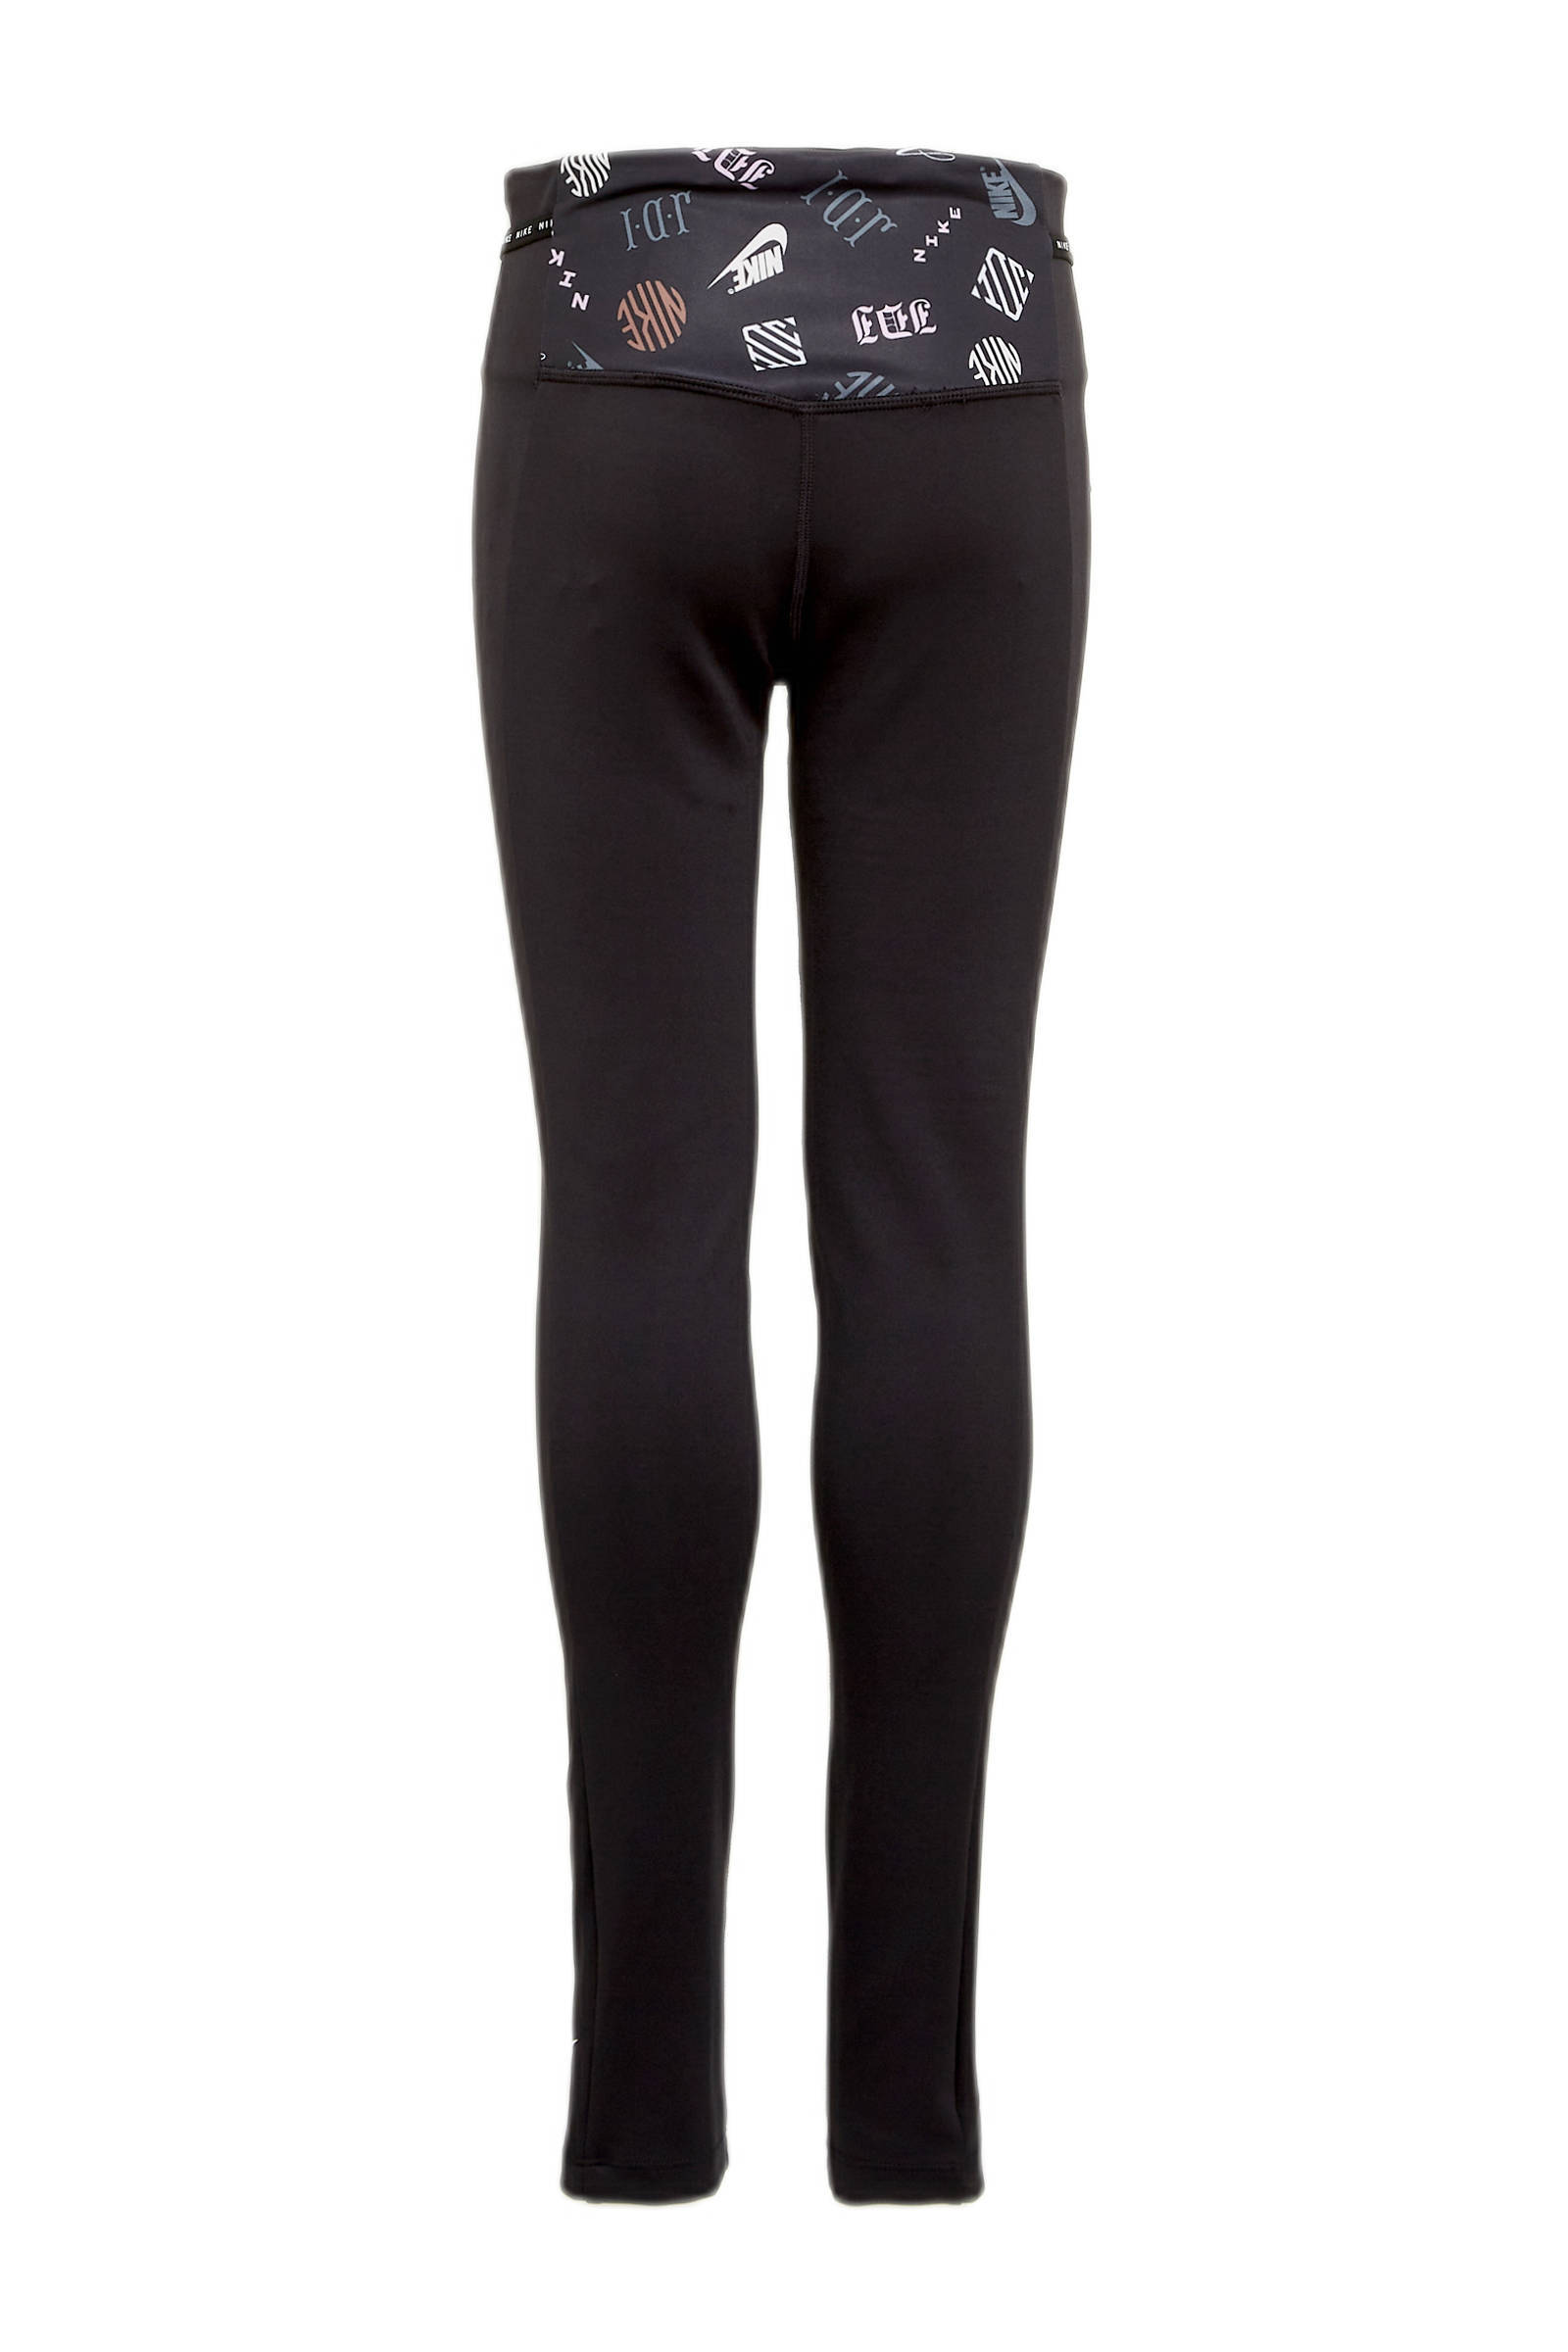 Nike Dri FIT One Luxe Legging met print voor meisjes Black/Black/White Kind online kopen